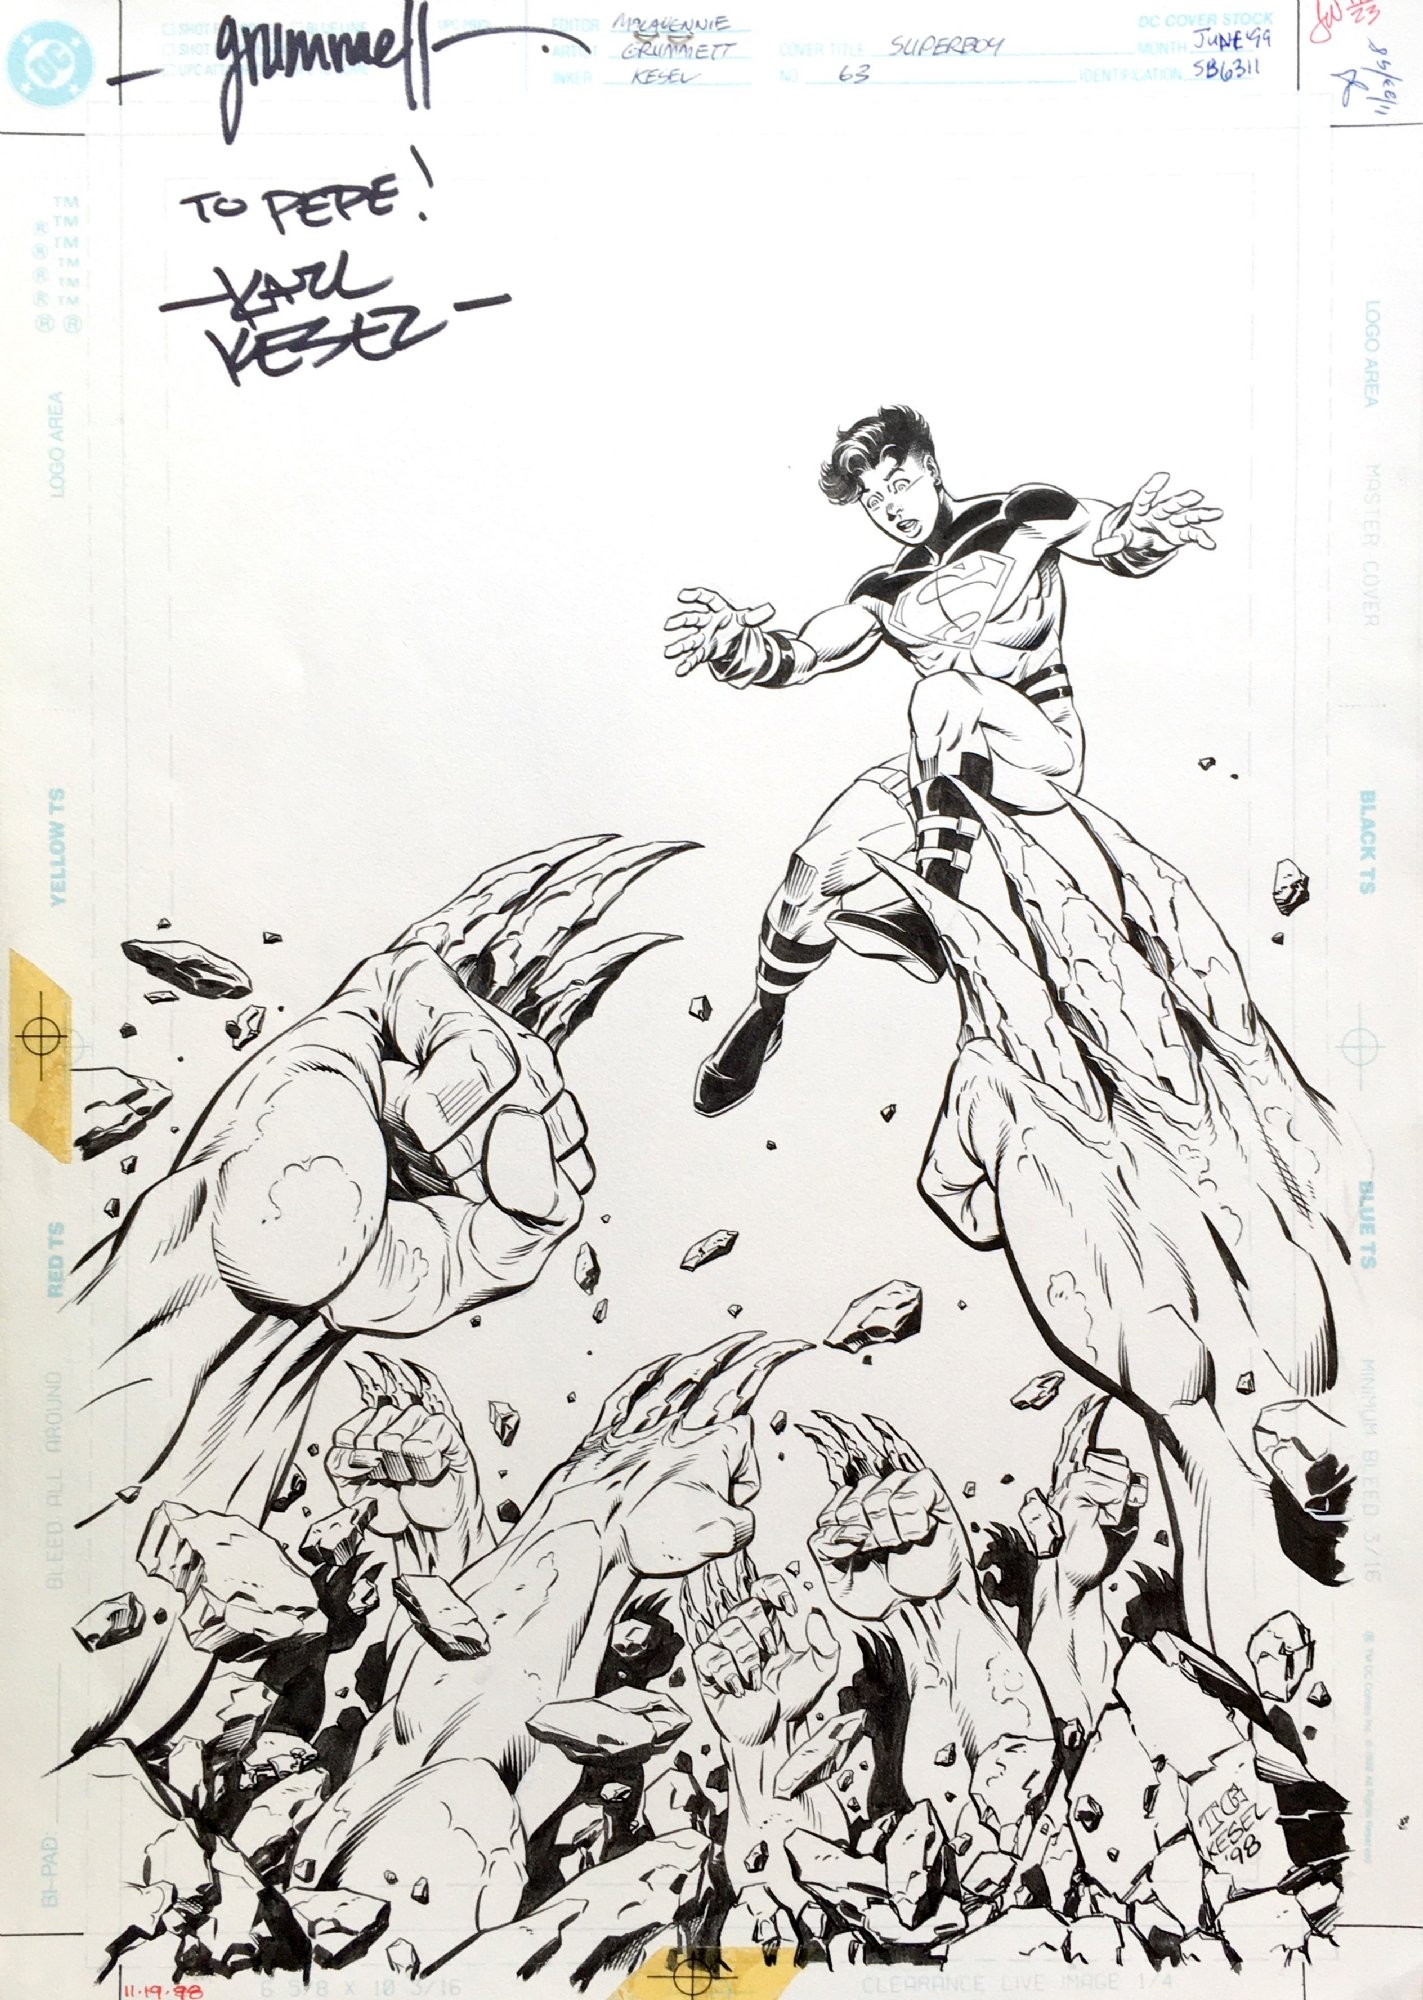 Superboy Vol 4 63 Cover Tom Grummett Pencils Karl Kesel Layout Writer And Inks In Pepe 7596